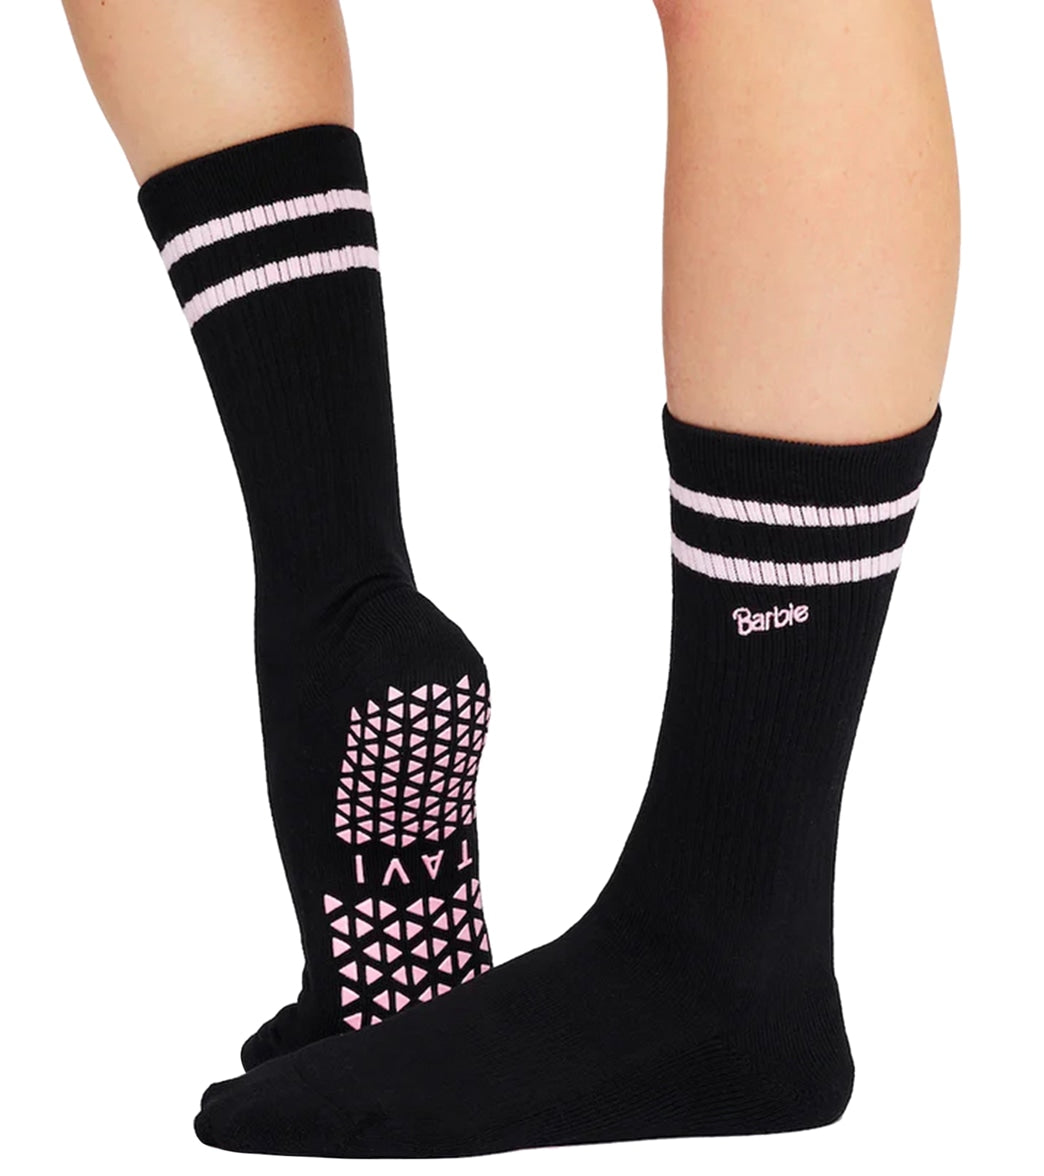 Tavi Kai Grip Socks at YogaOutlet.com –